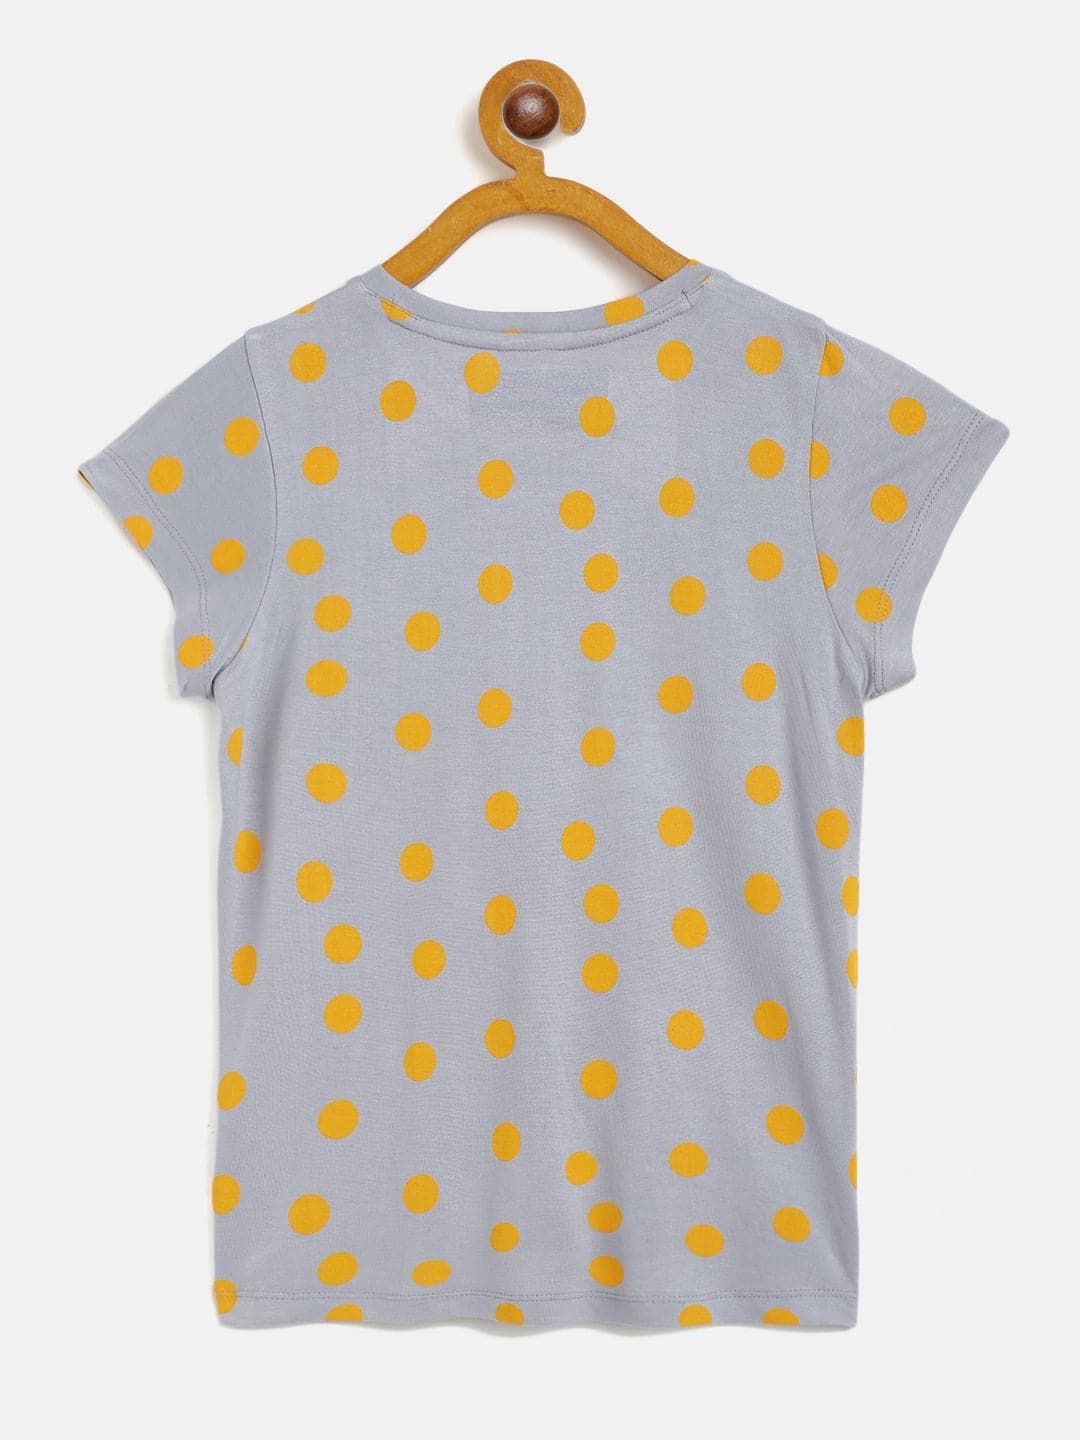 Girls Grey & Yellow Polka Dot T-Shirt - Lyush Kids